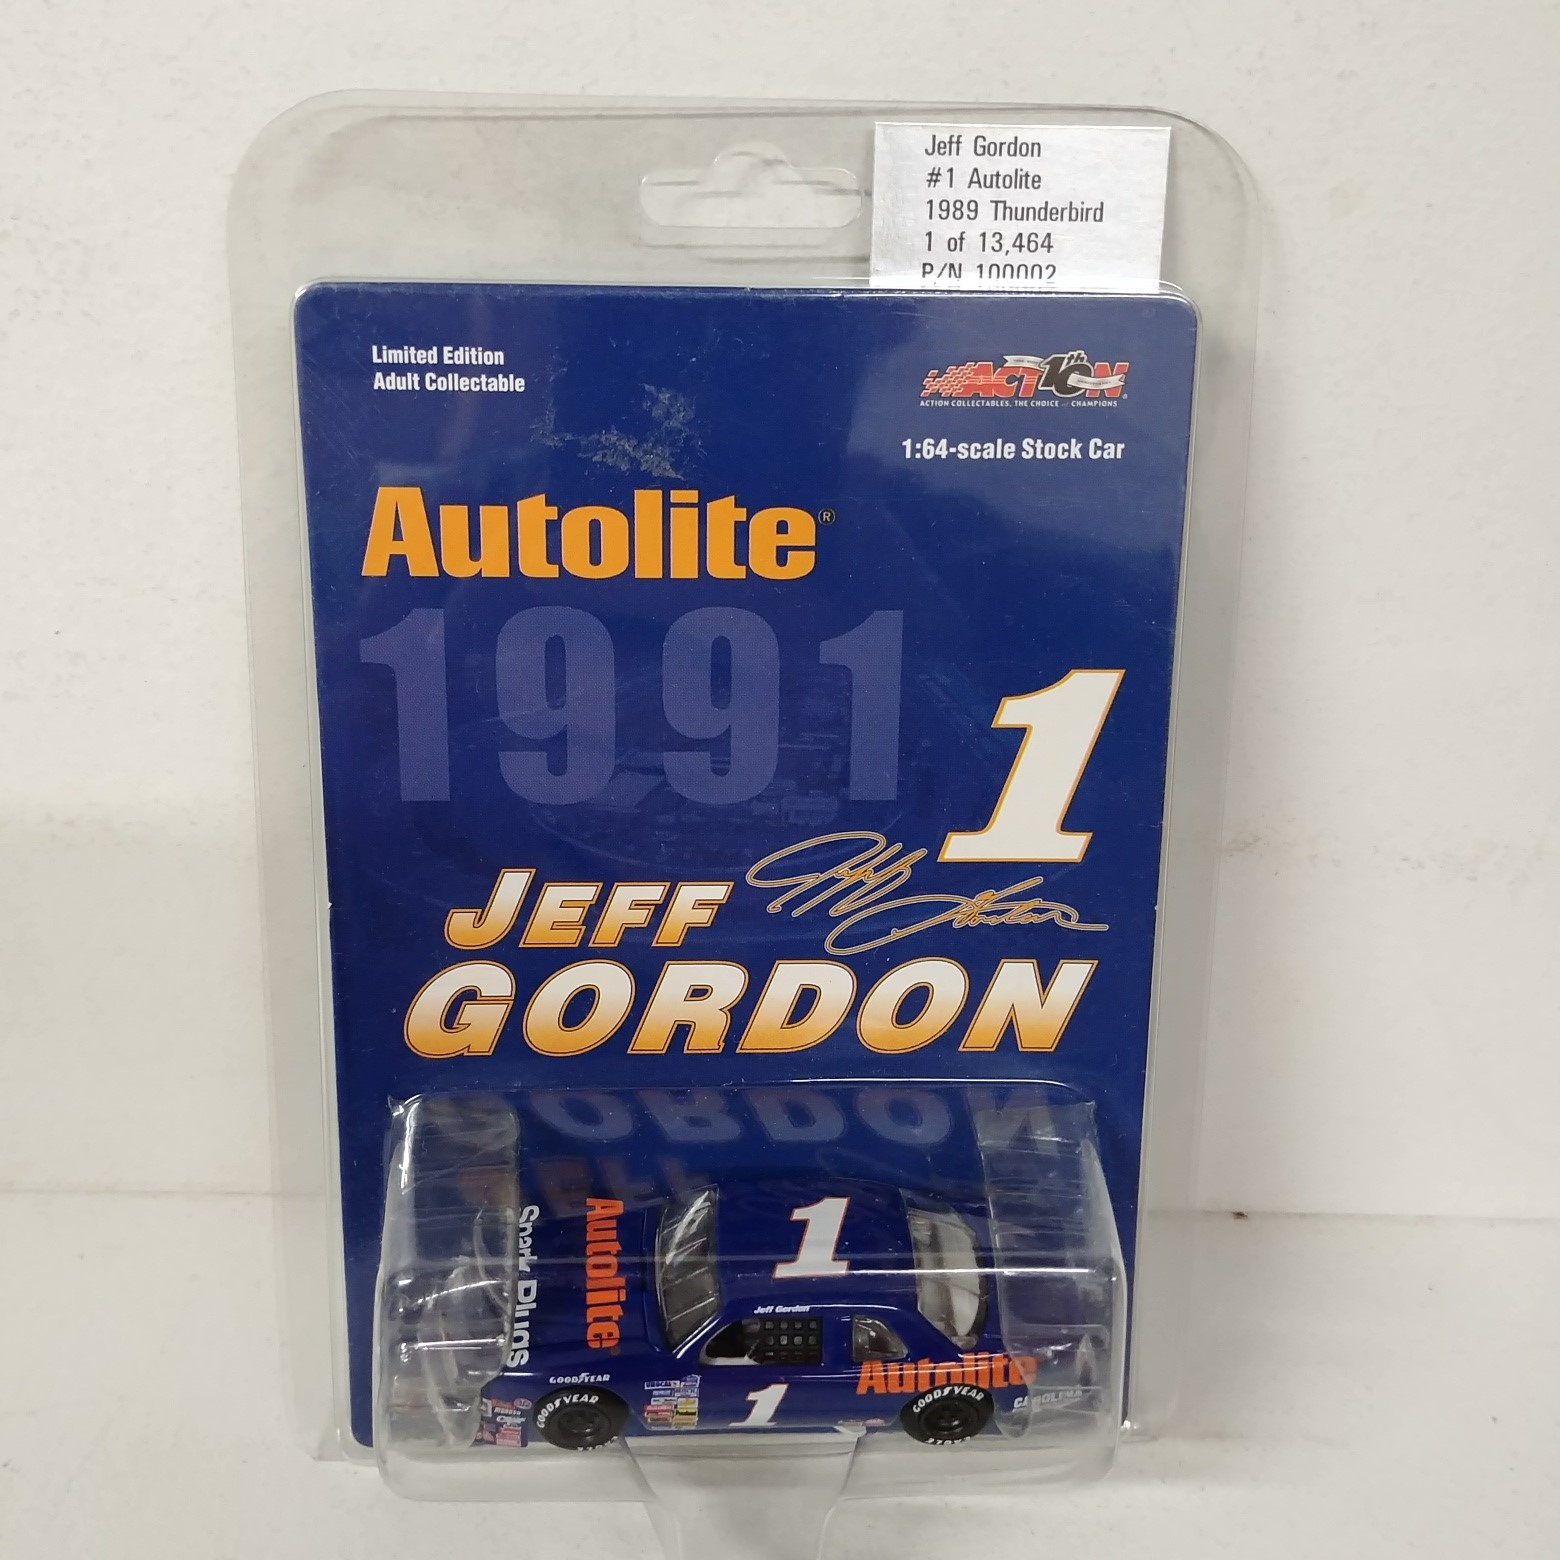 1989 Jeff Gordon 1/64th Autolite "Busch Series" ARC Thunderbird